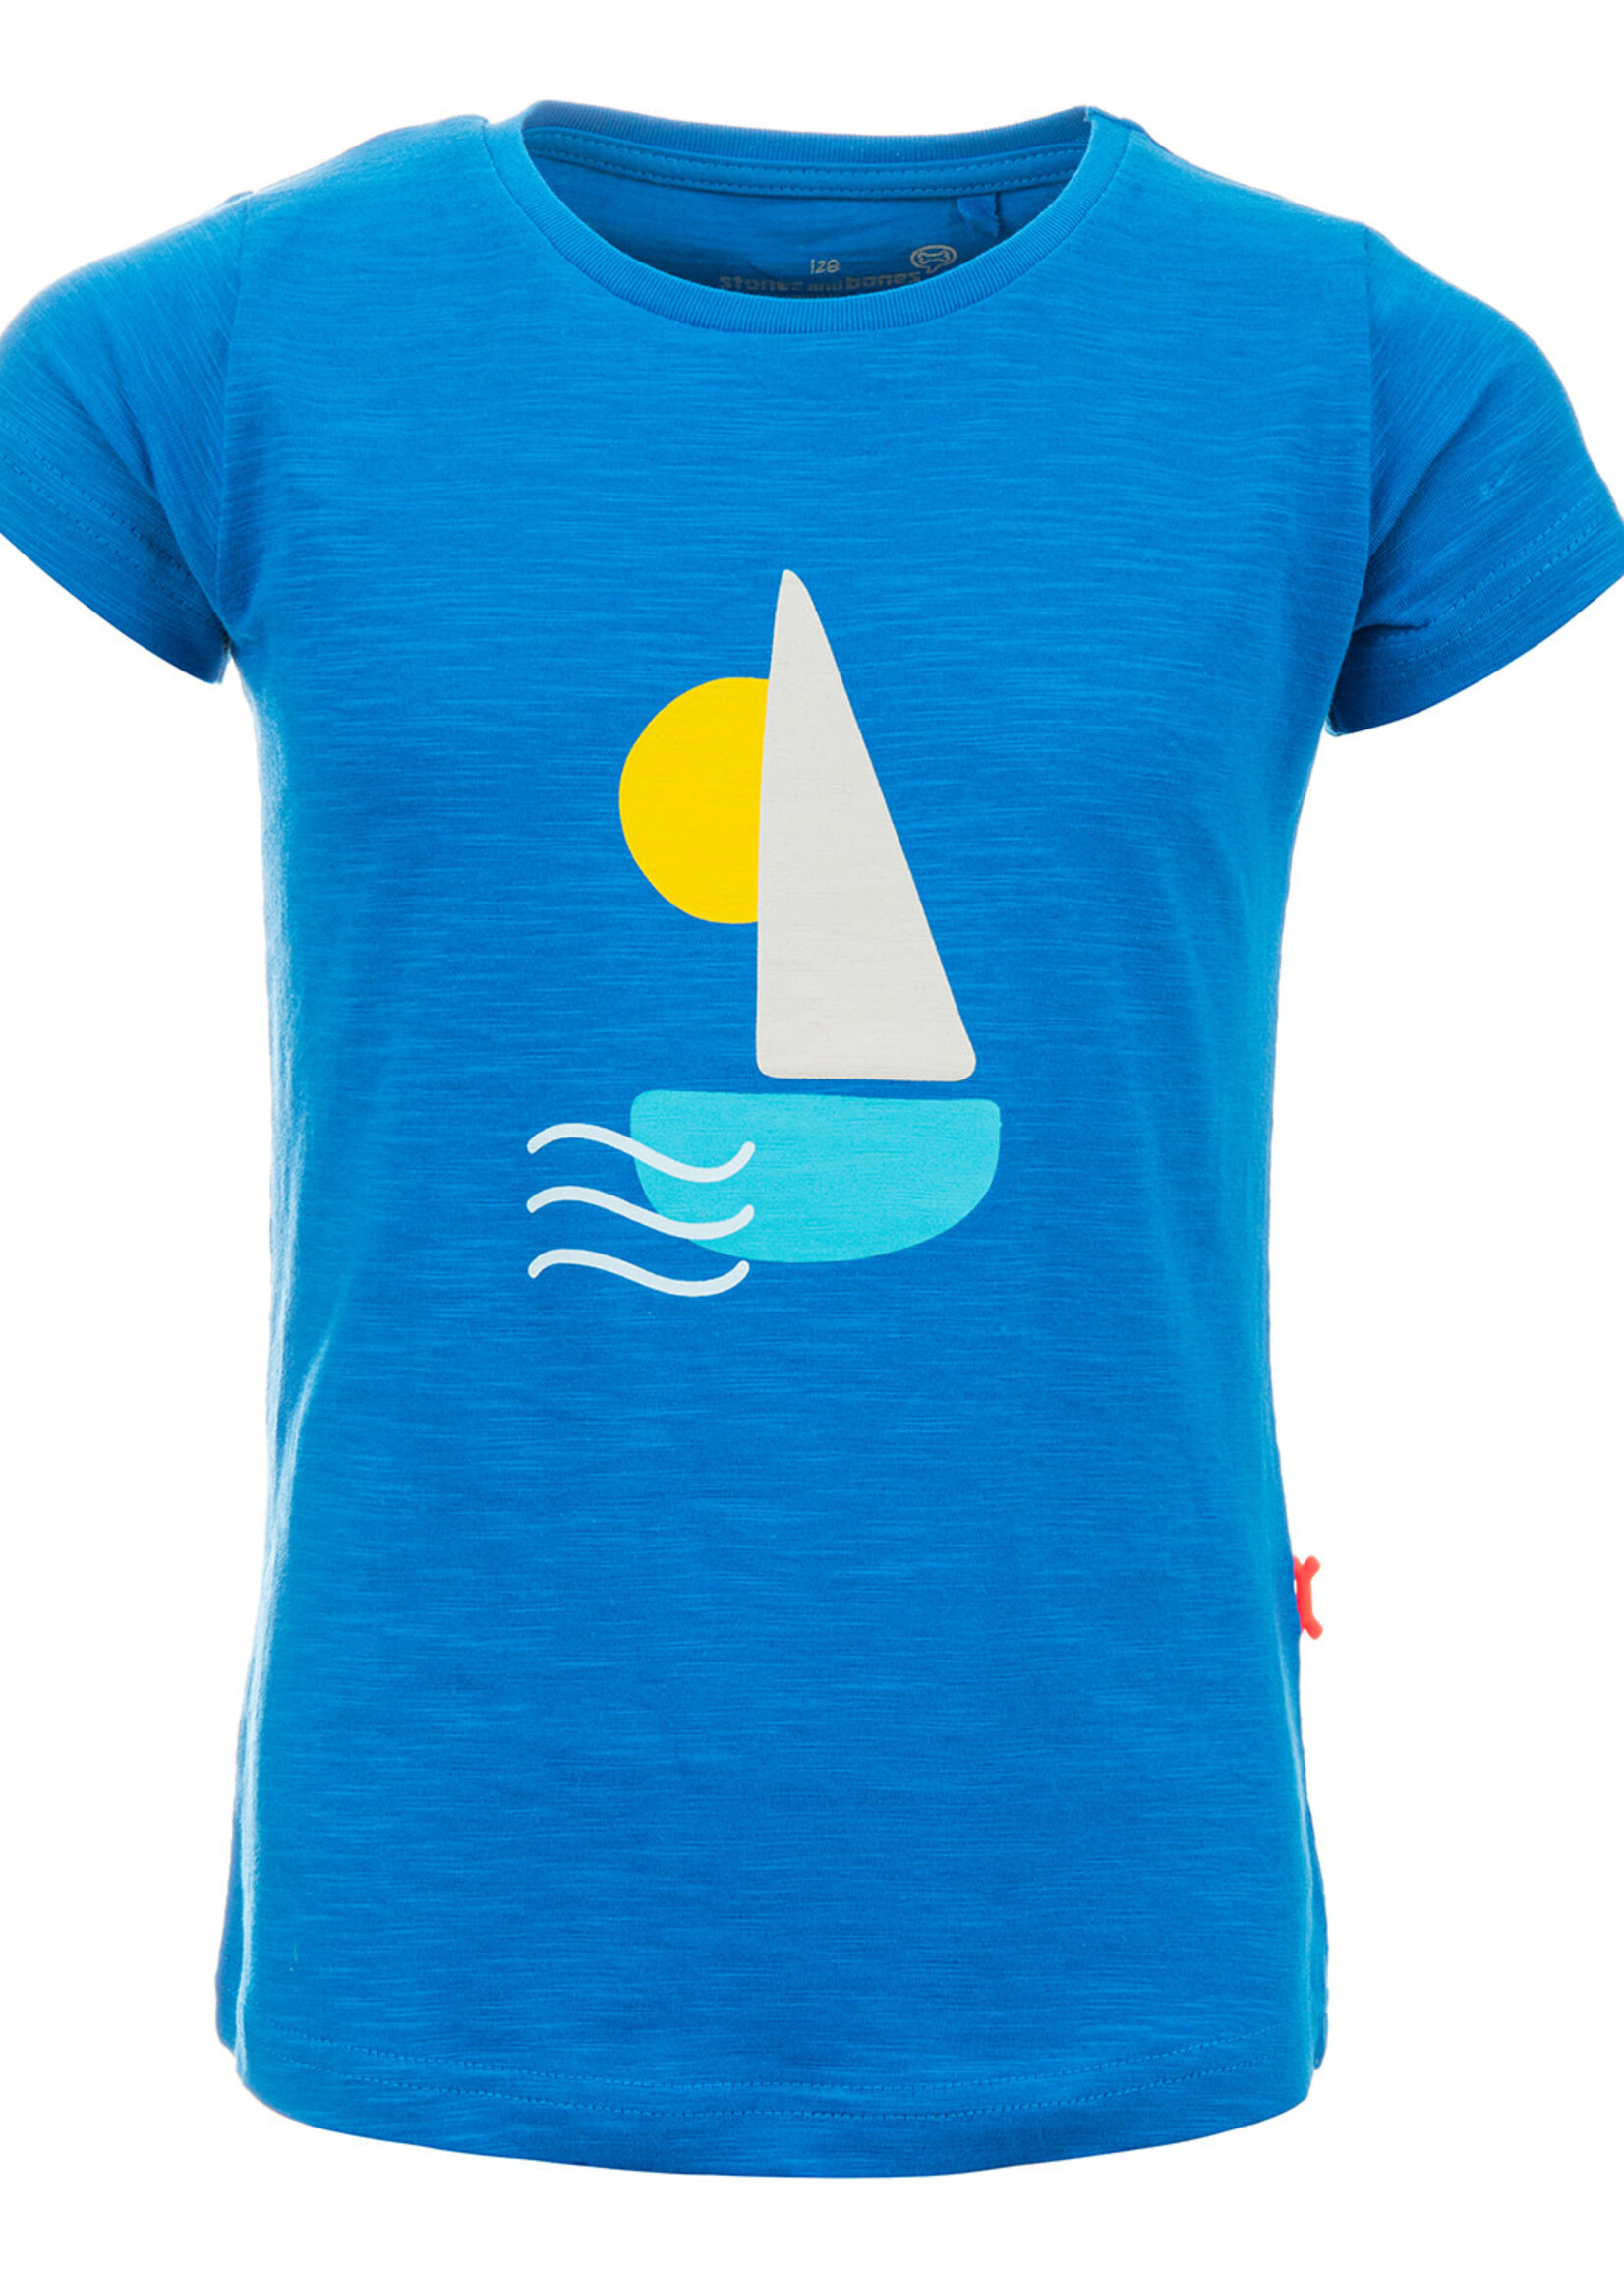 Camille t-shirt 'Boat' - Royal blue